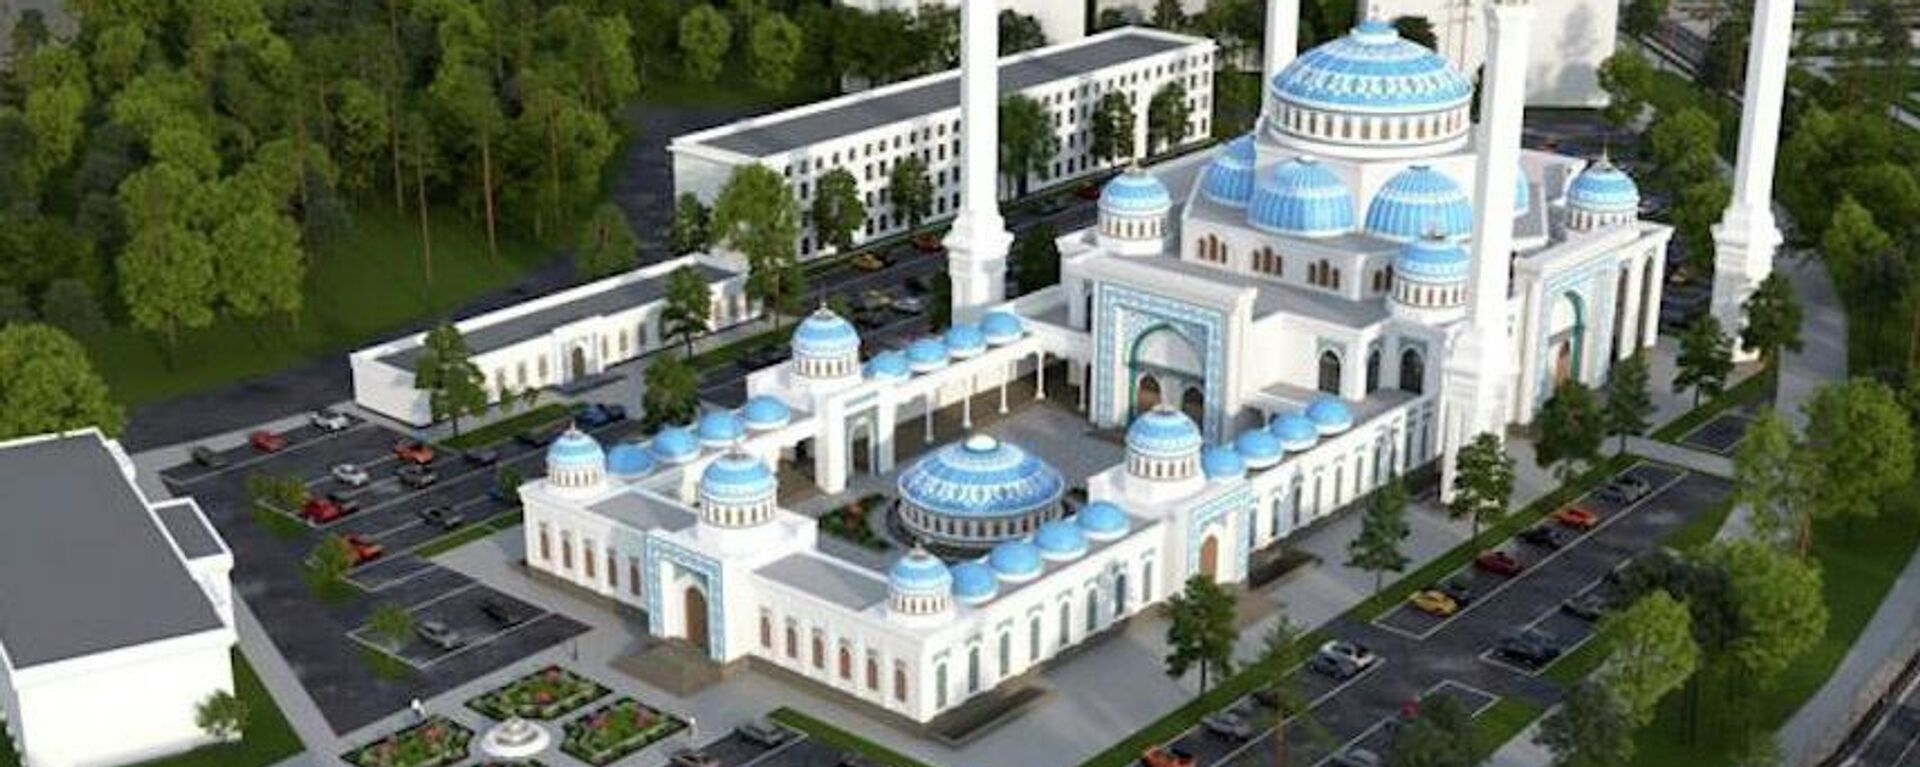 Эскиз мечети планируемого на юге Бишкека - Sputnik Кыргызстан, 1920, 01.02.2023